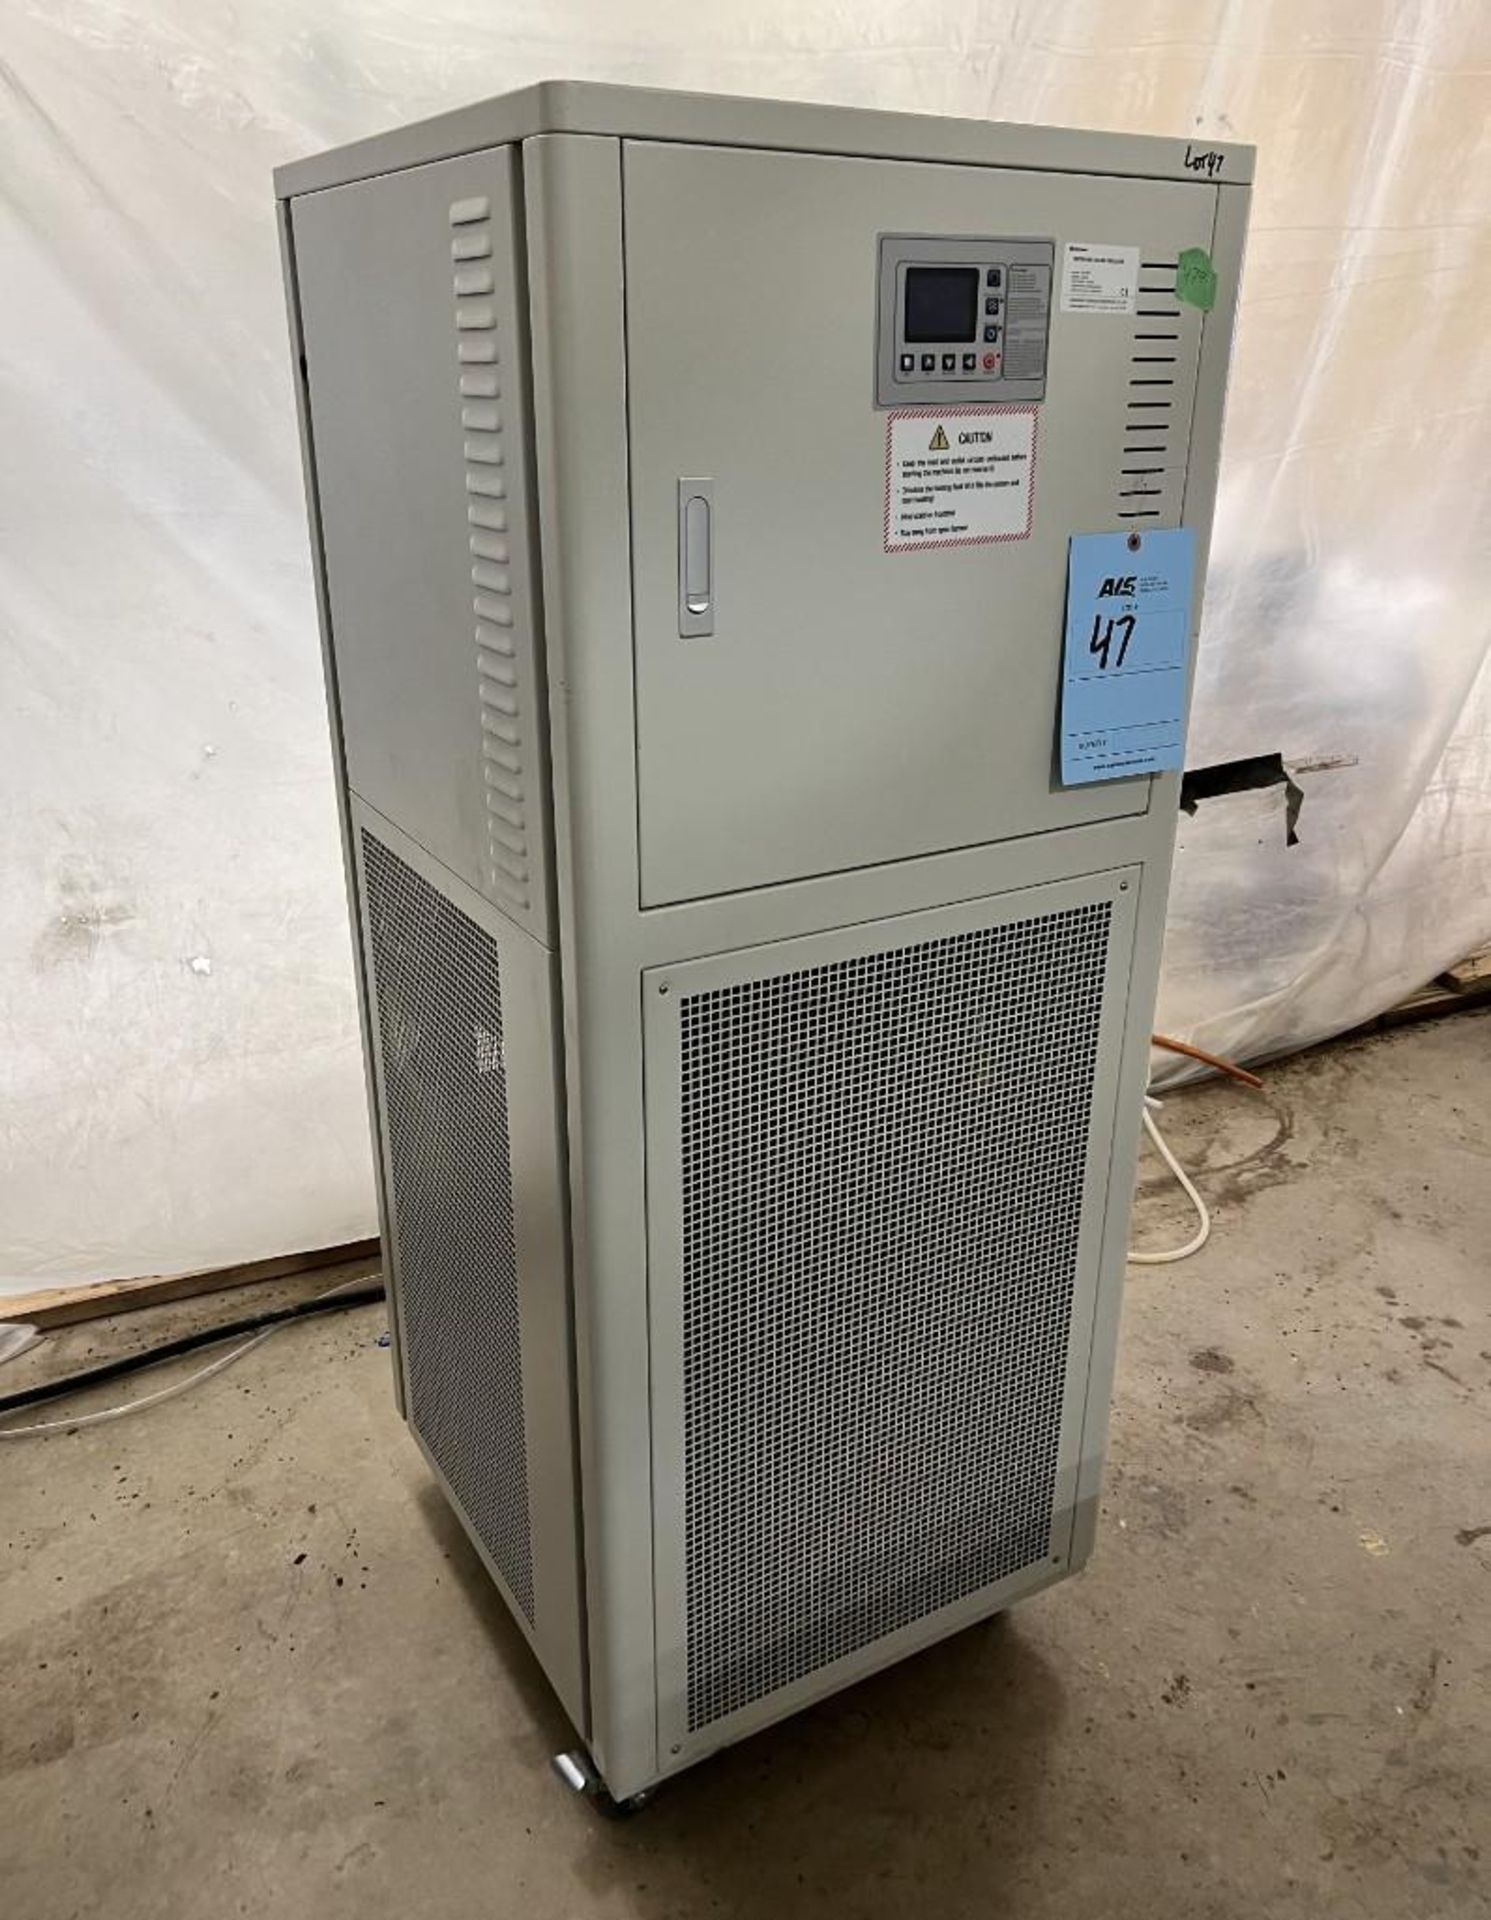 YHCHEM Heating & Cooling Circulator, Model YHR-100T, Built 06/2019.